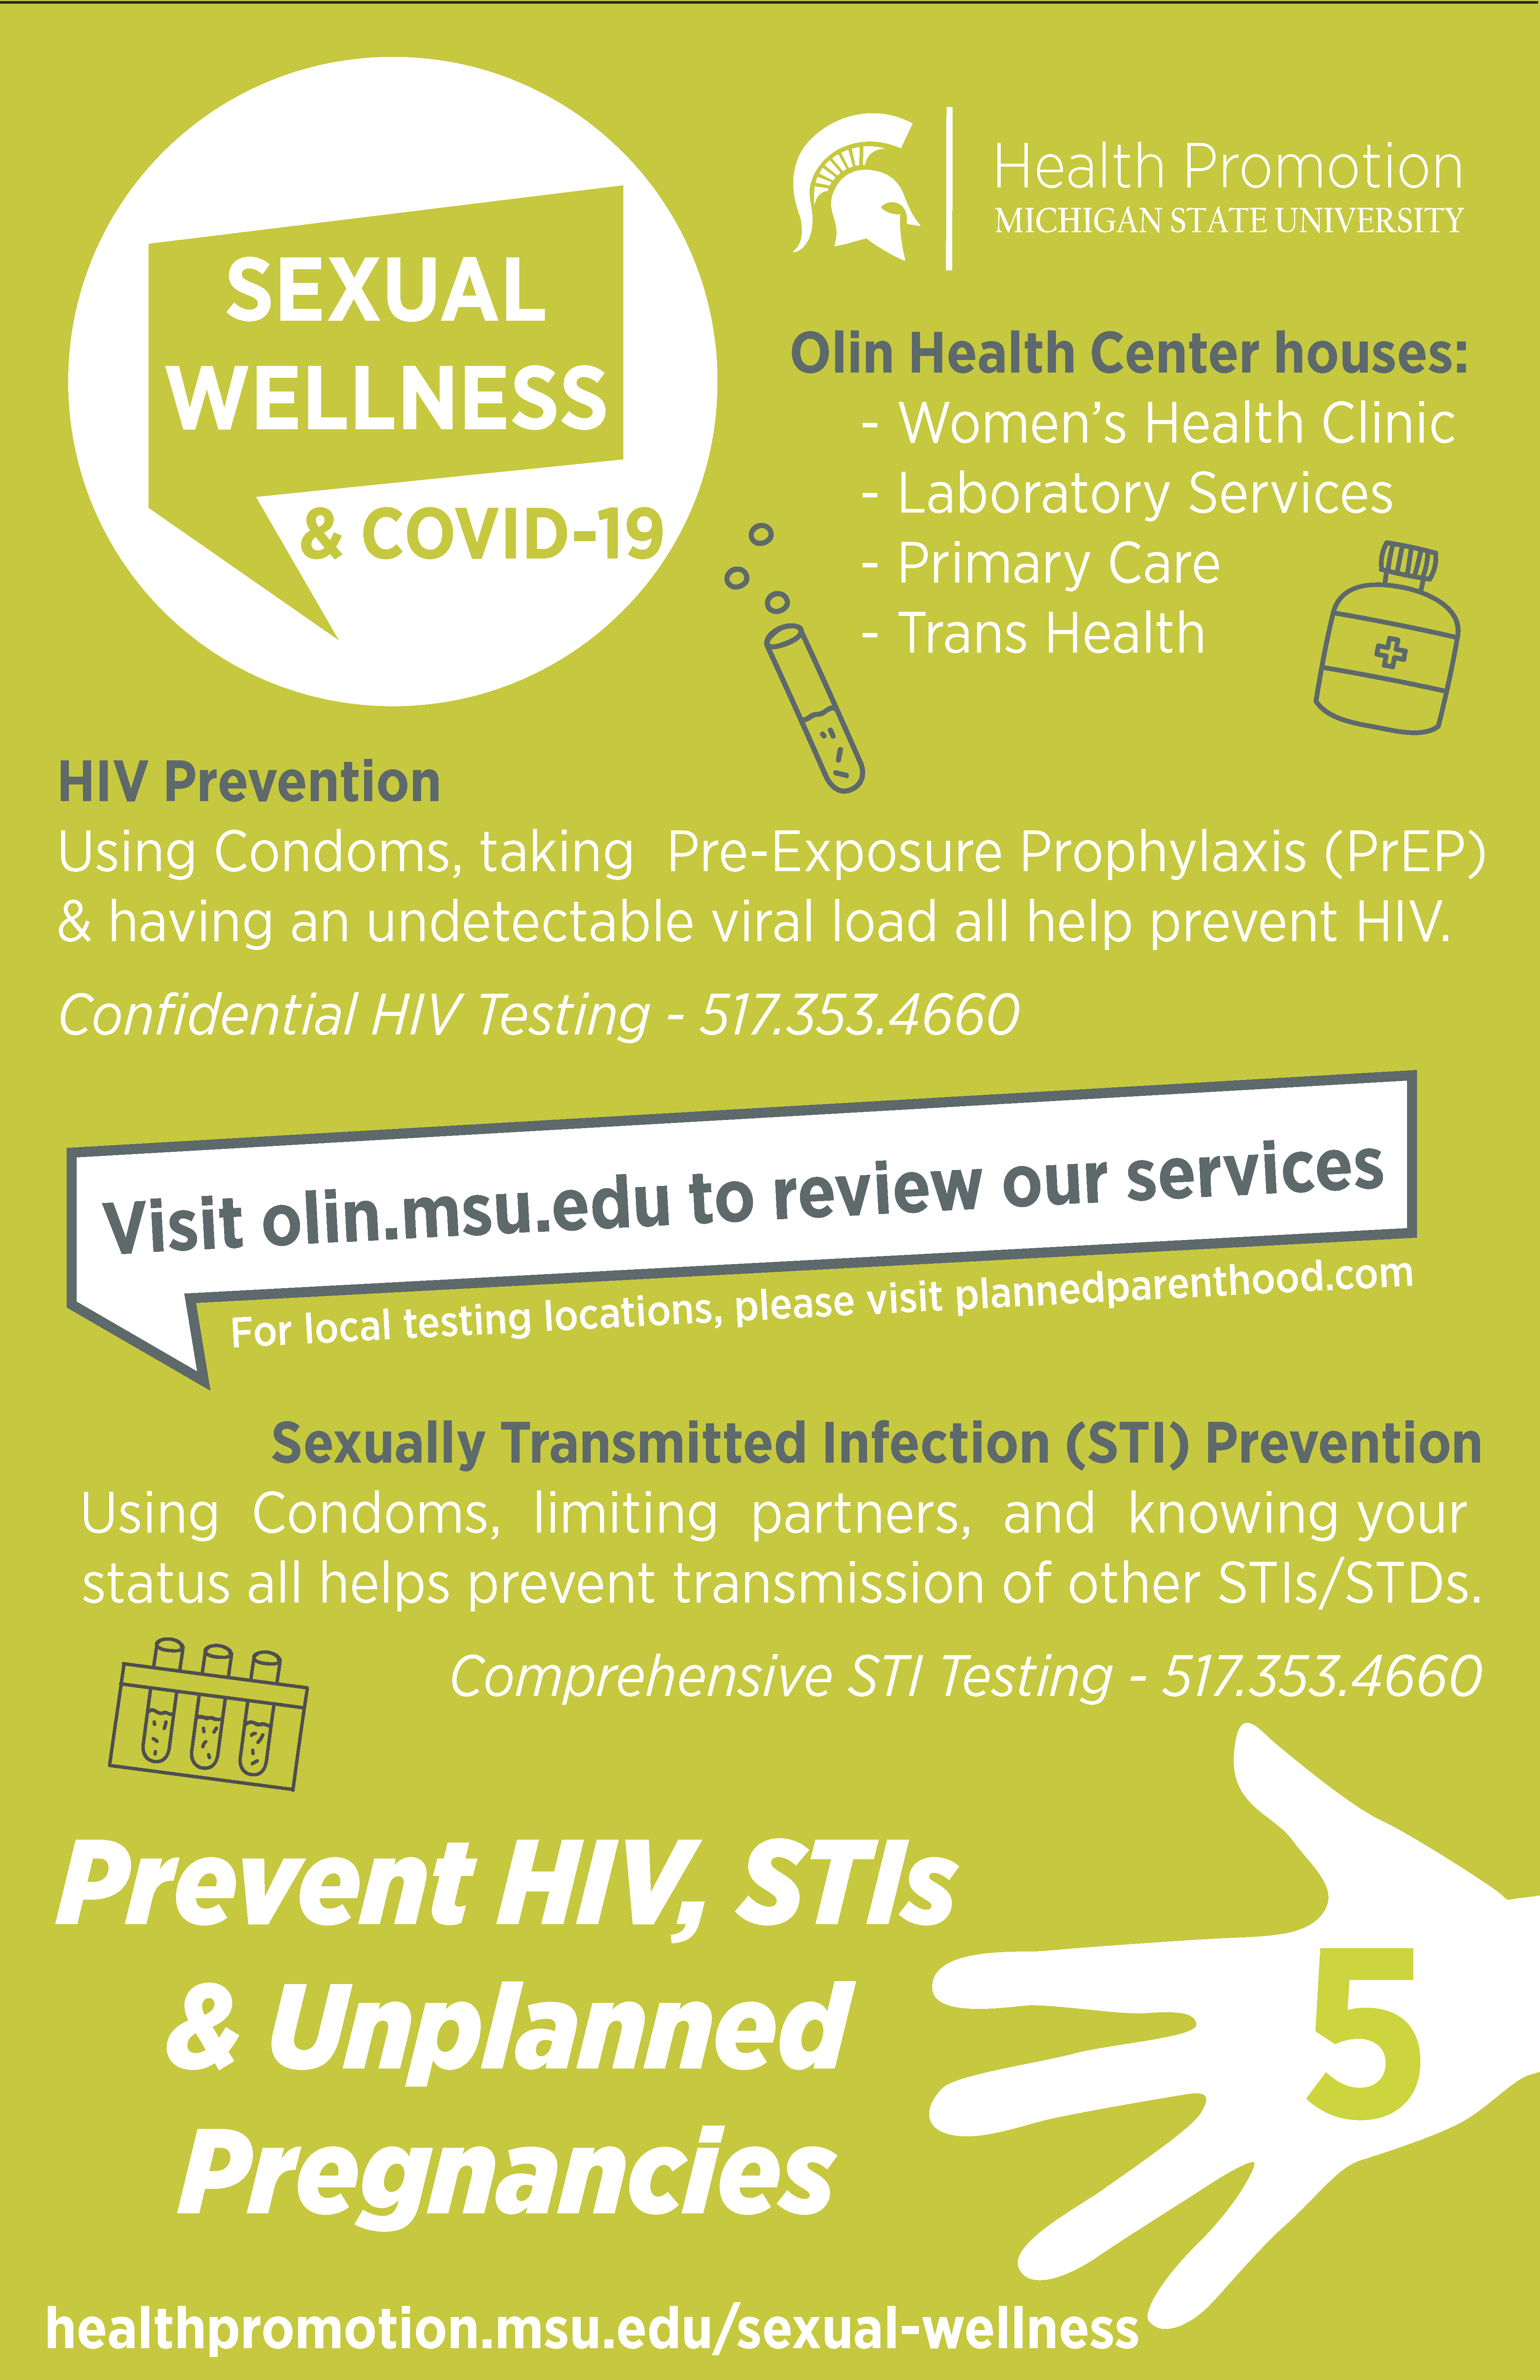 Prevent HIV. STIs and unplanned pregnancies